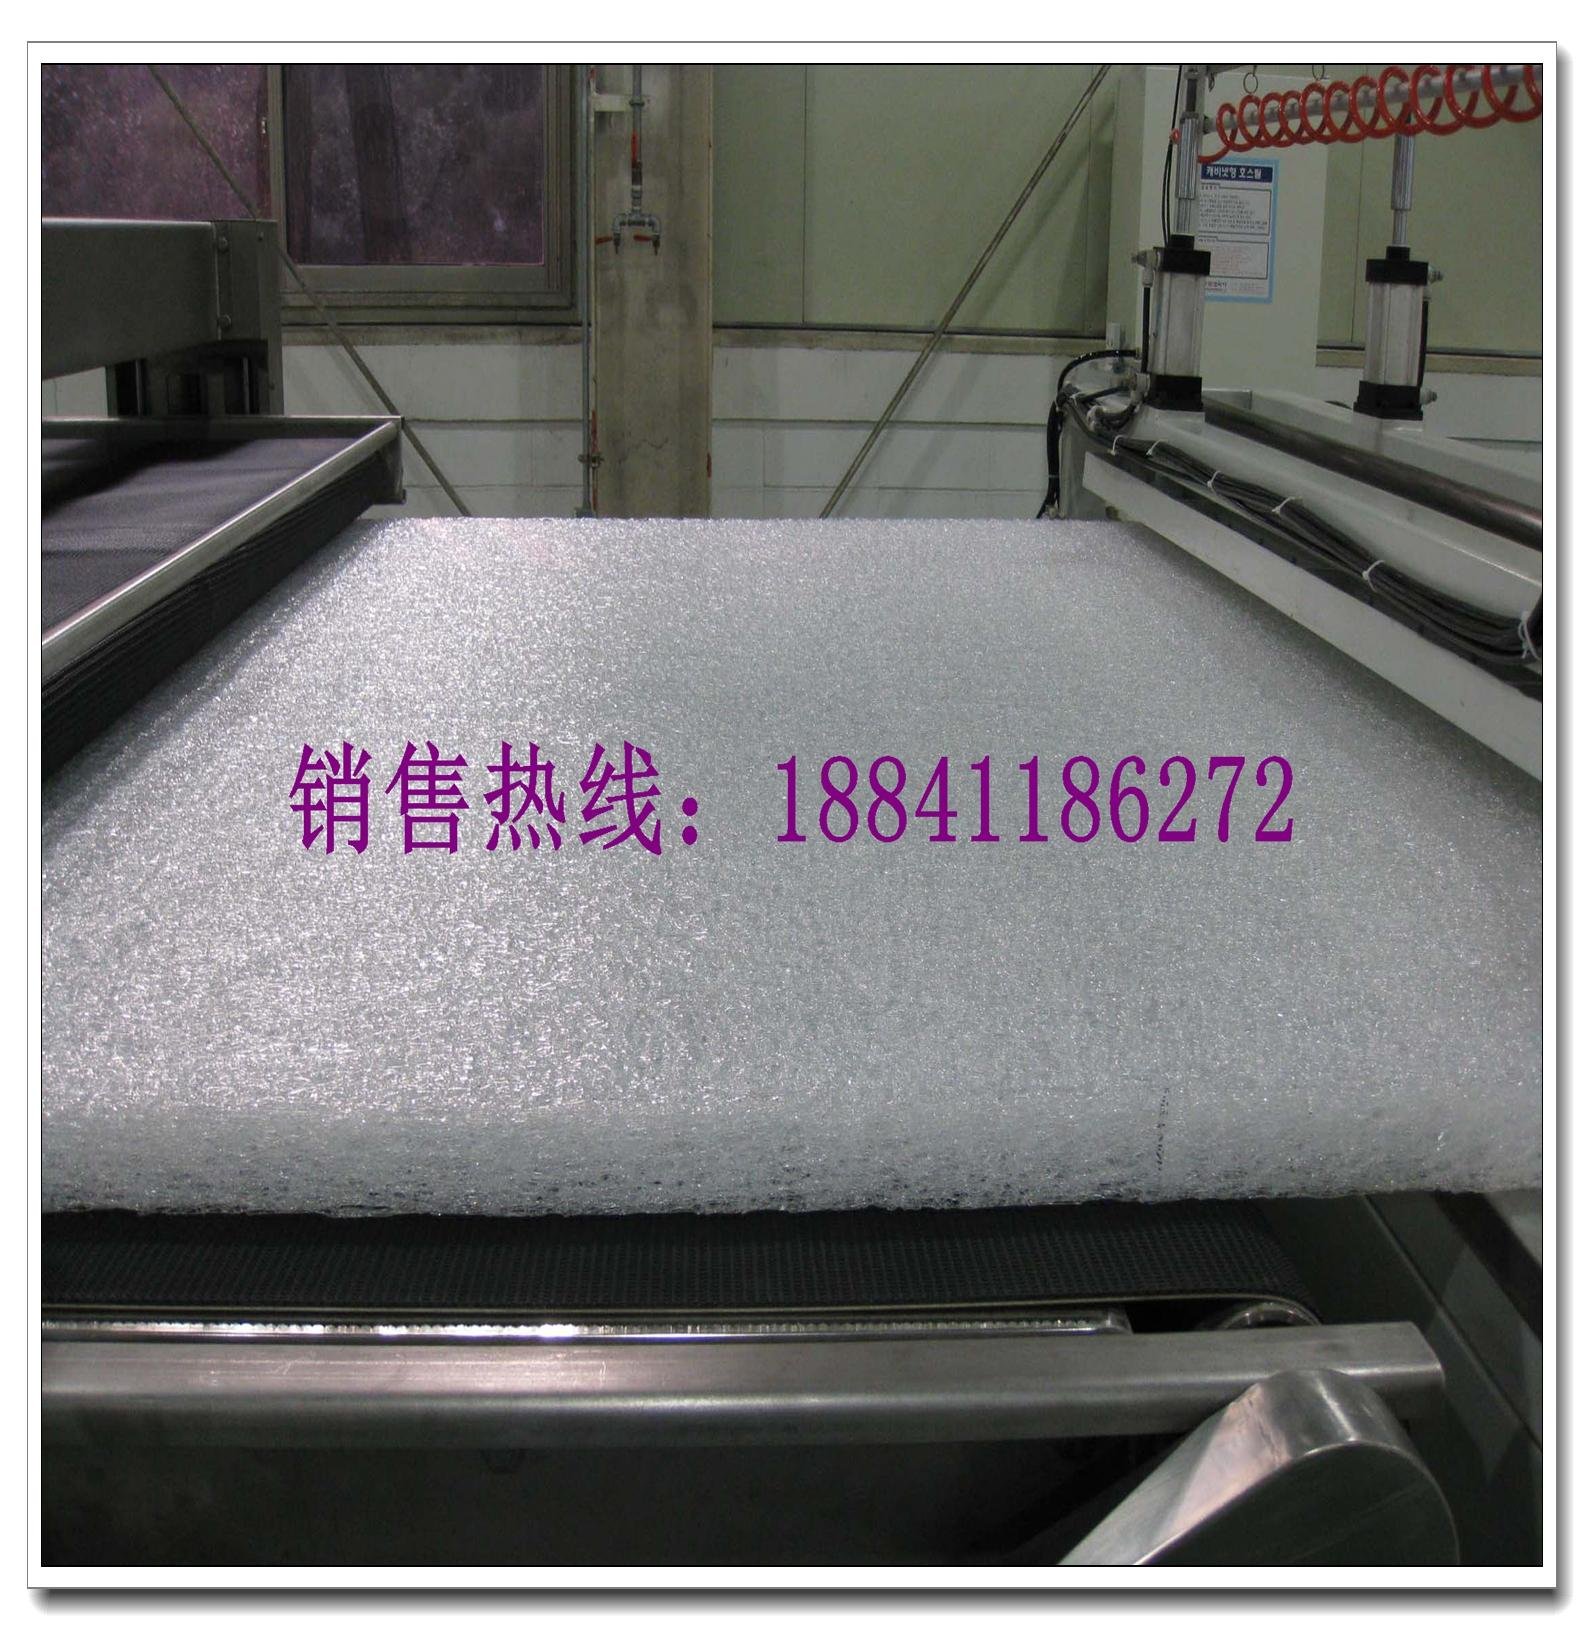 Coil mattress production line 4